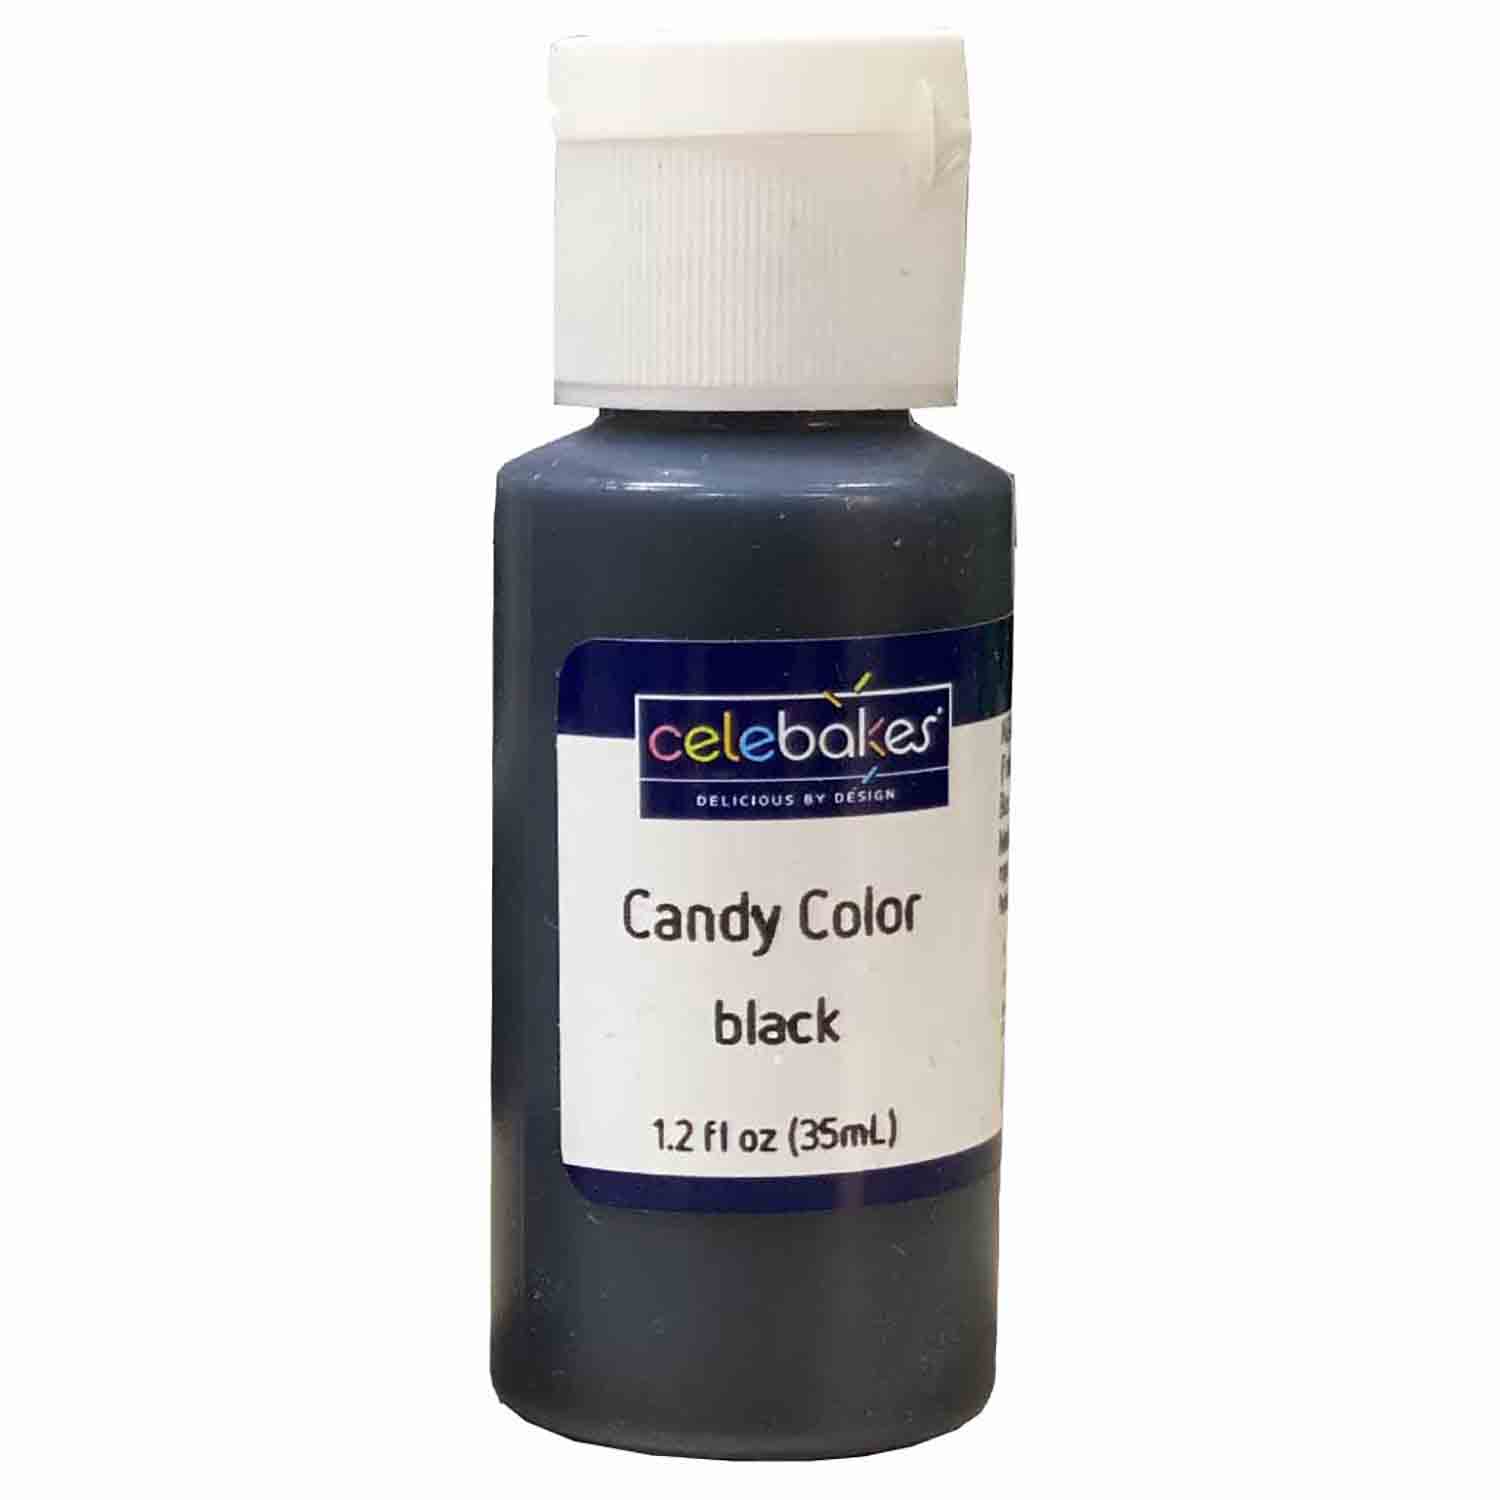 Black Candy Color - Celebakes